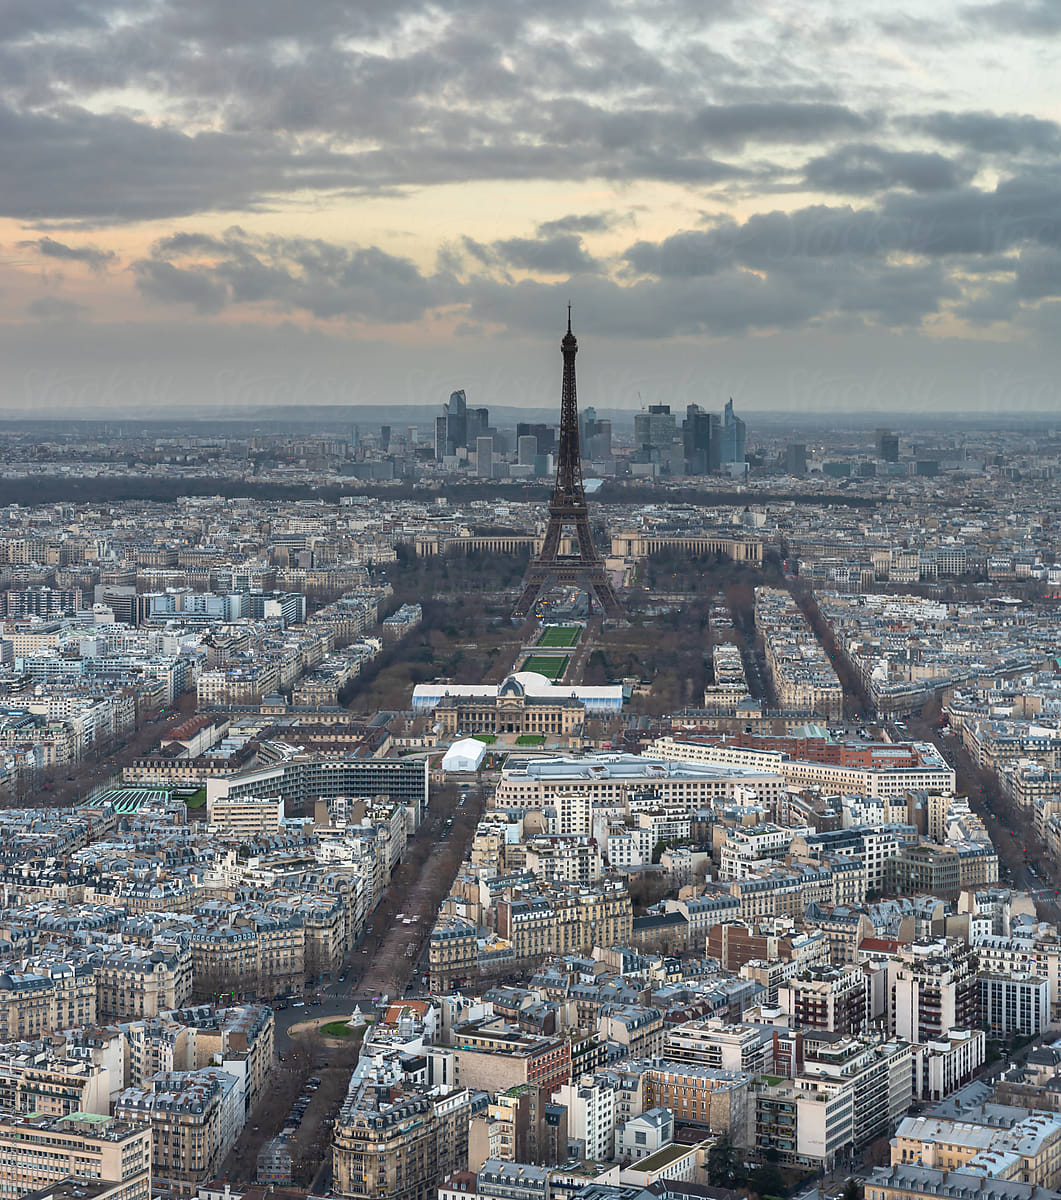 Paris from the sky (vt)